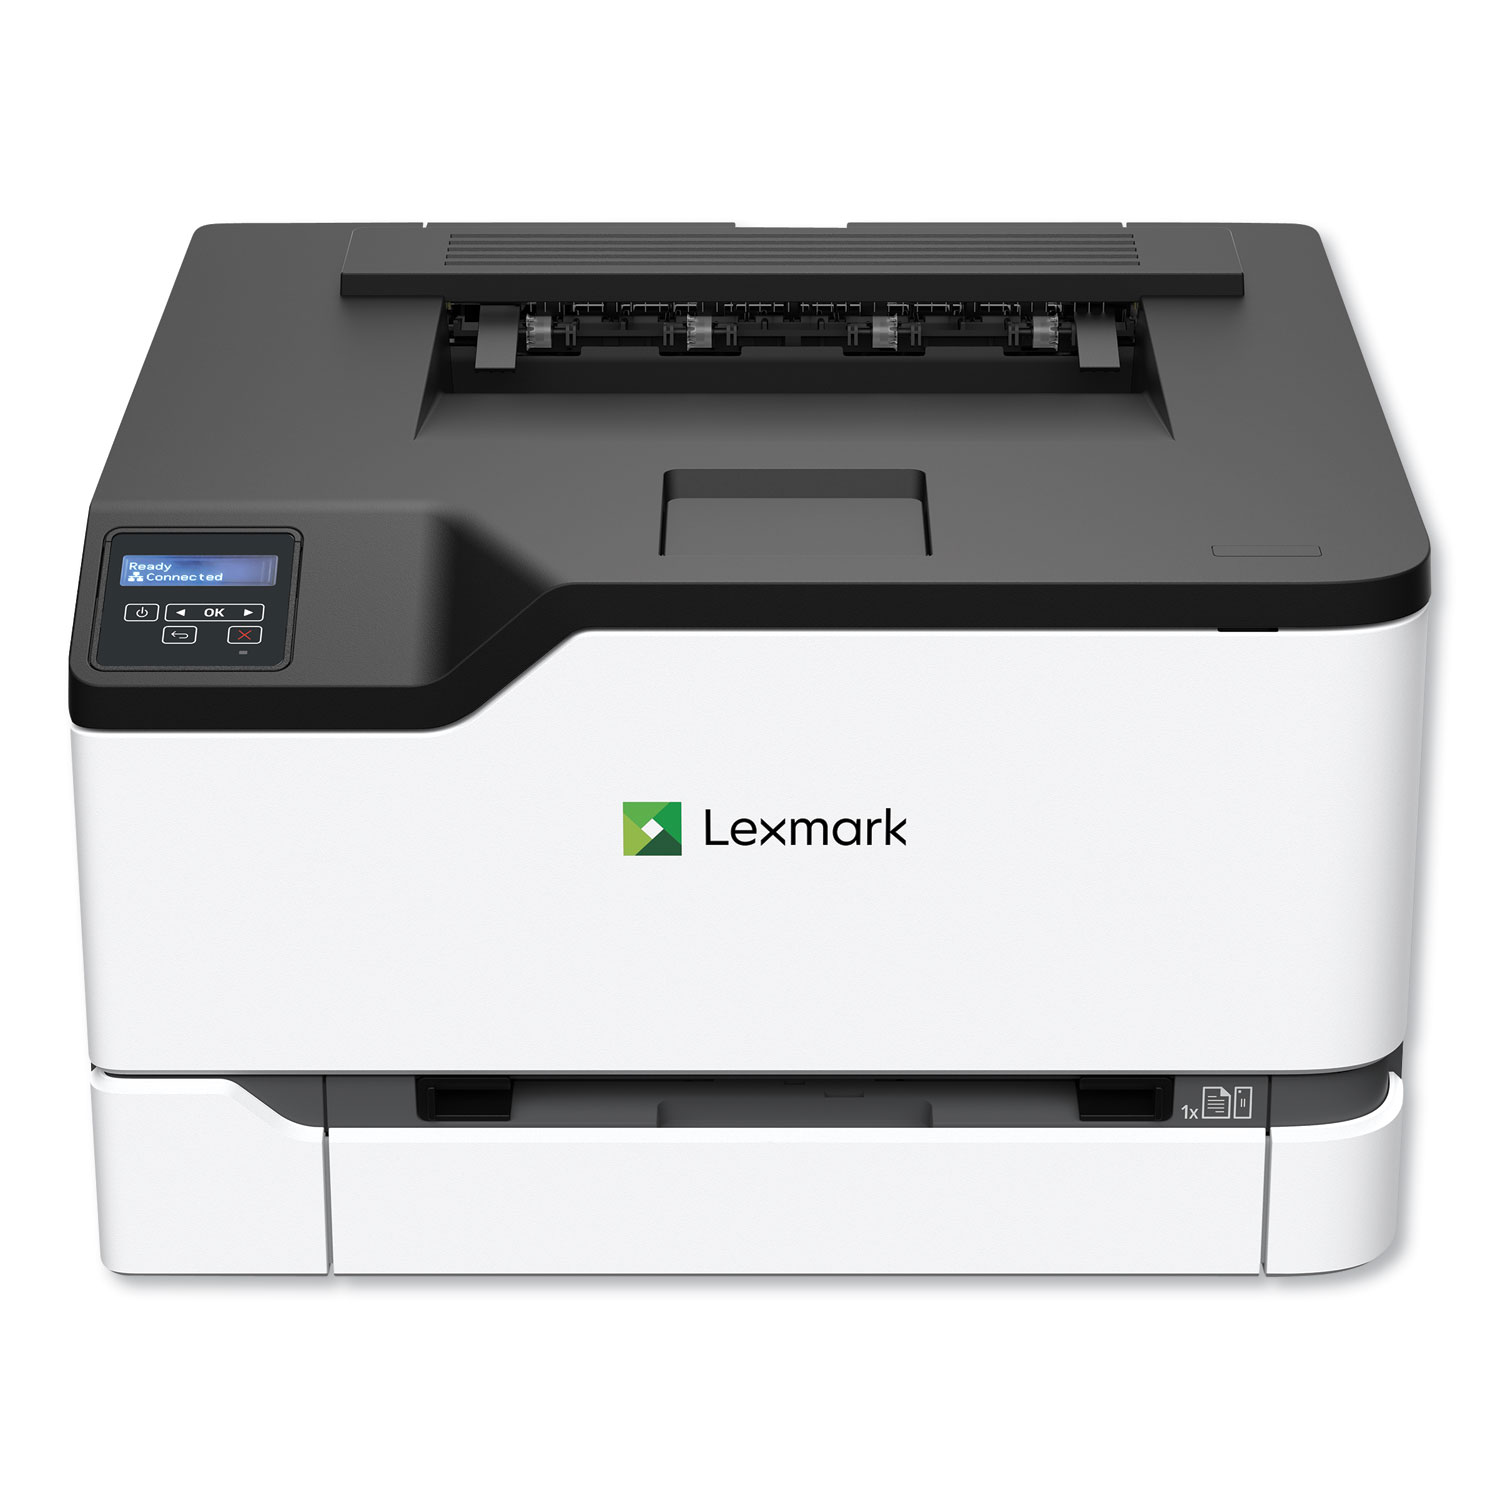  Lexmark 40N9000 C3224dw Wireless Color Laser Printer (LEX40N9000) 